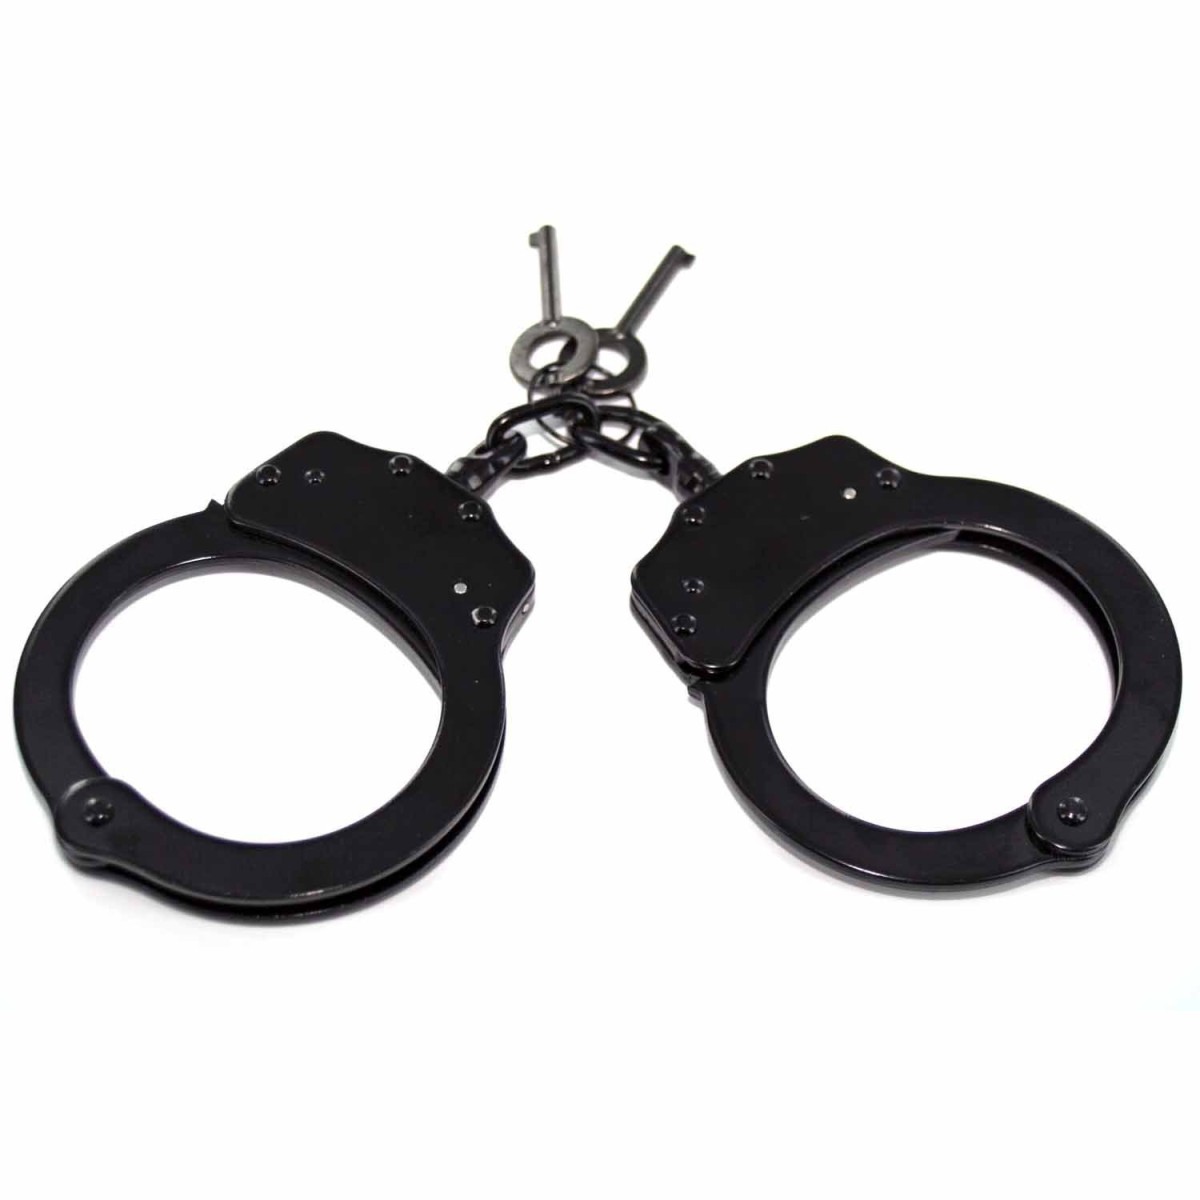 Mister B A83B Taiwan Handcuffs Black, kovová pouta s pojistkou